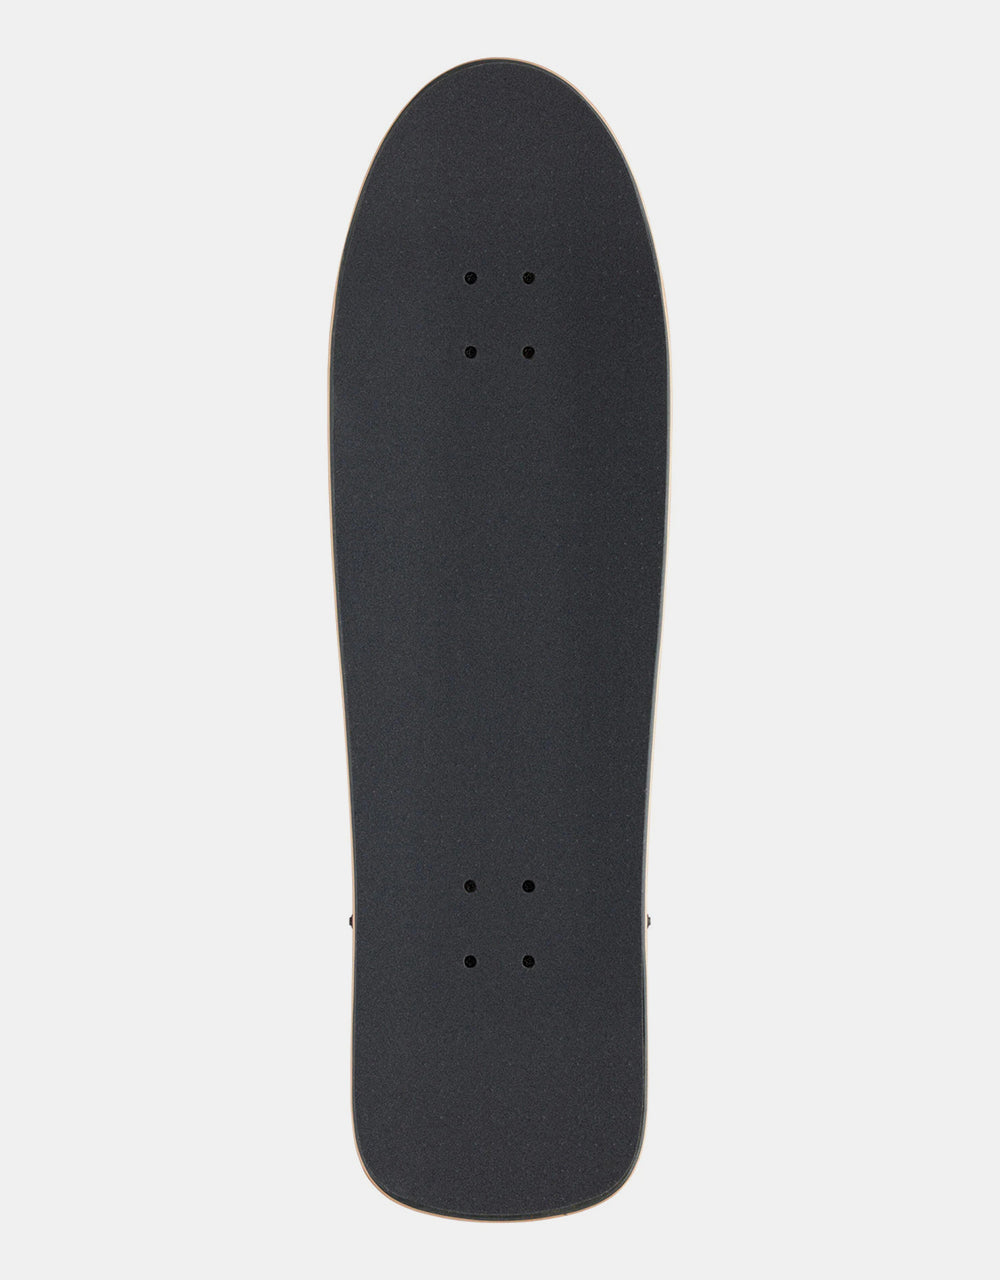 Santa Cruz Meek OG Slasher Hand Cruiser Skateboard - 9.7" x 31.7"